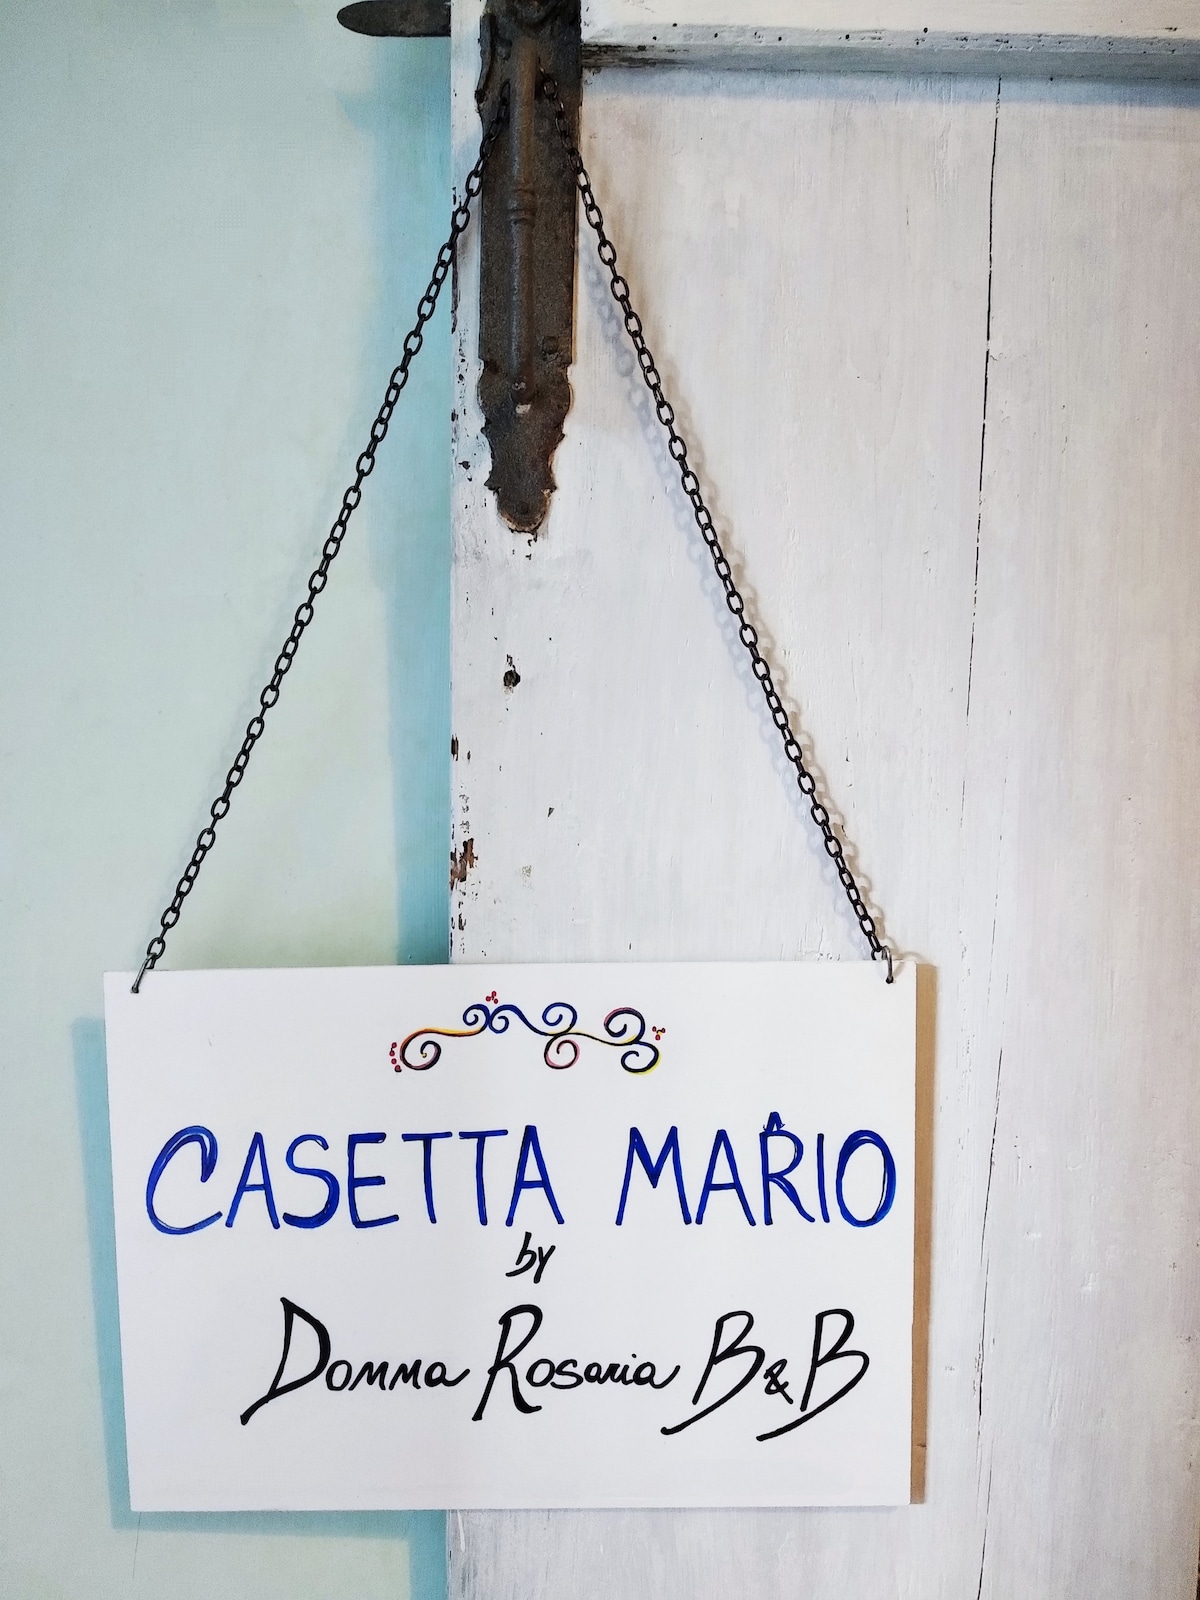 Casetta Mario, centro storico